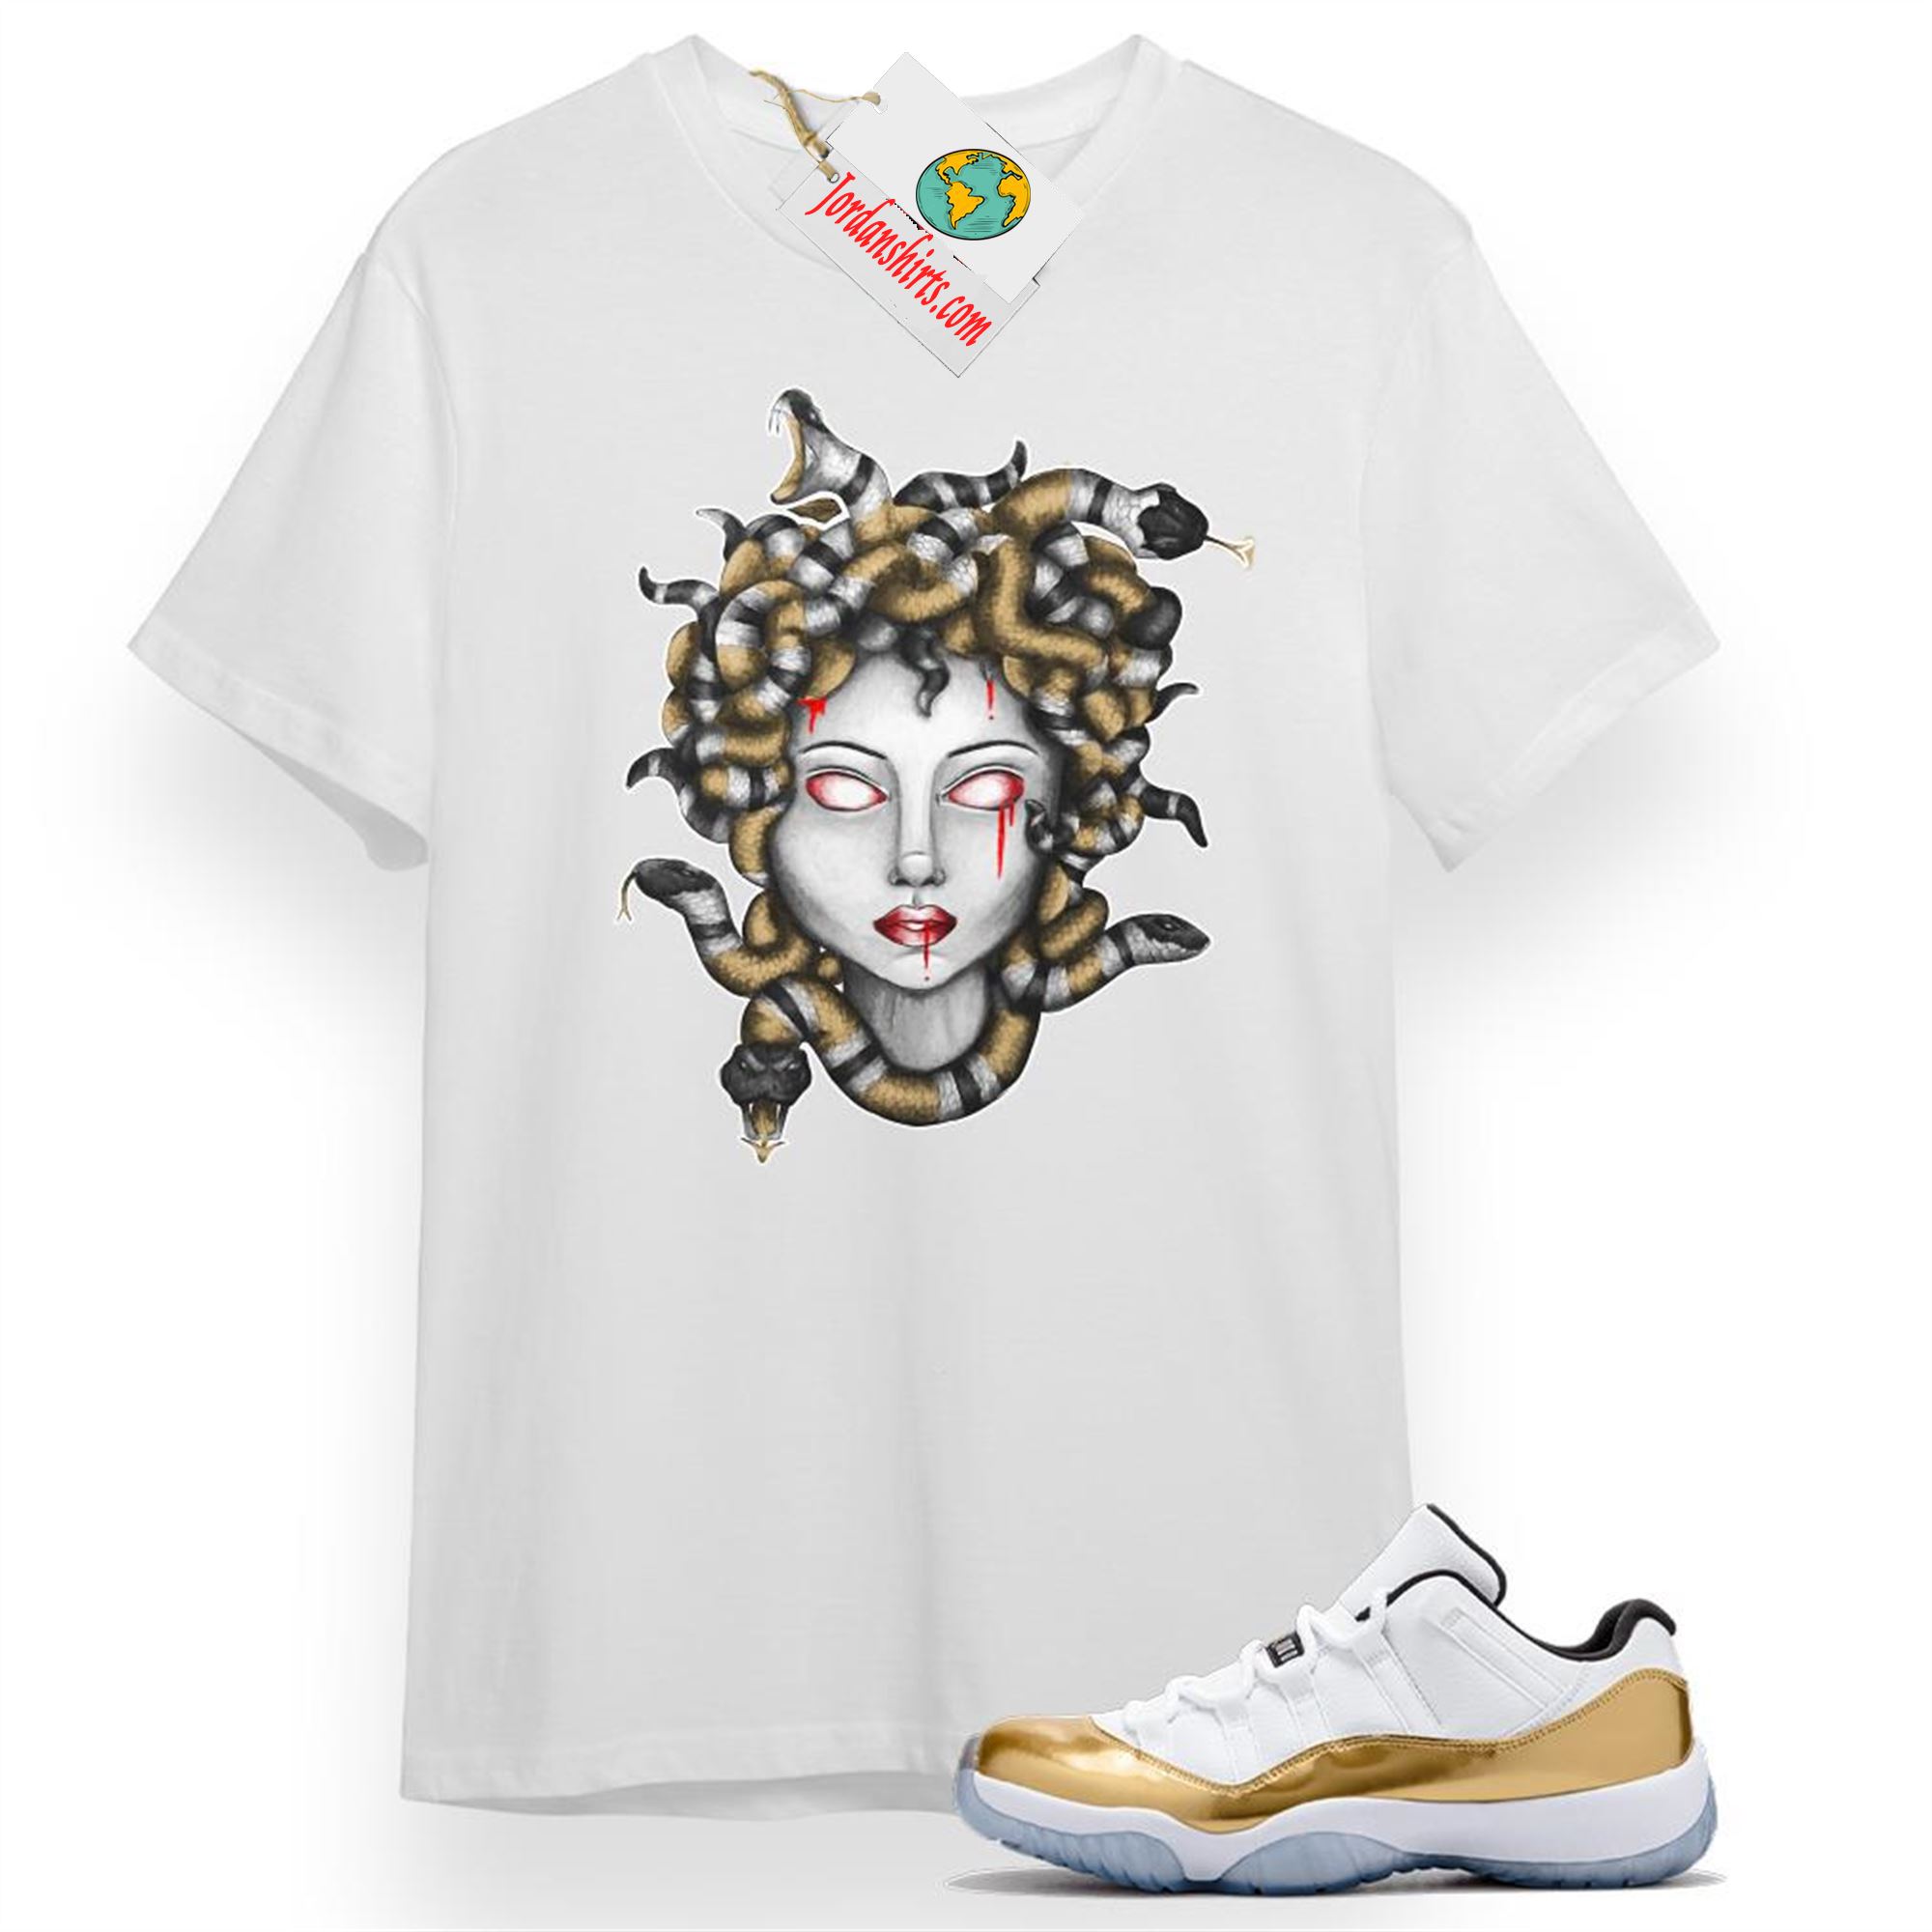 Jordan 11 Shirt, Medusa Snake White T-shirt Air Jordan 11 Gold 11s Size Up To 5xl